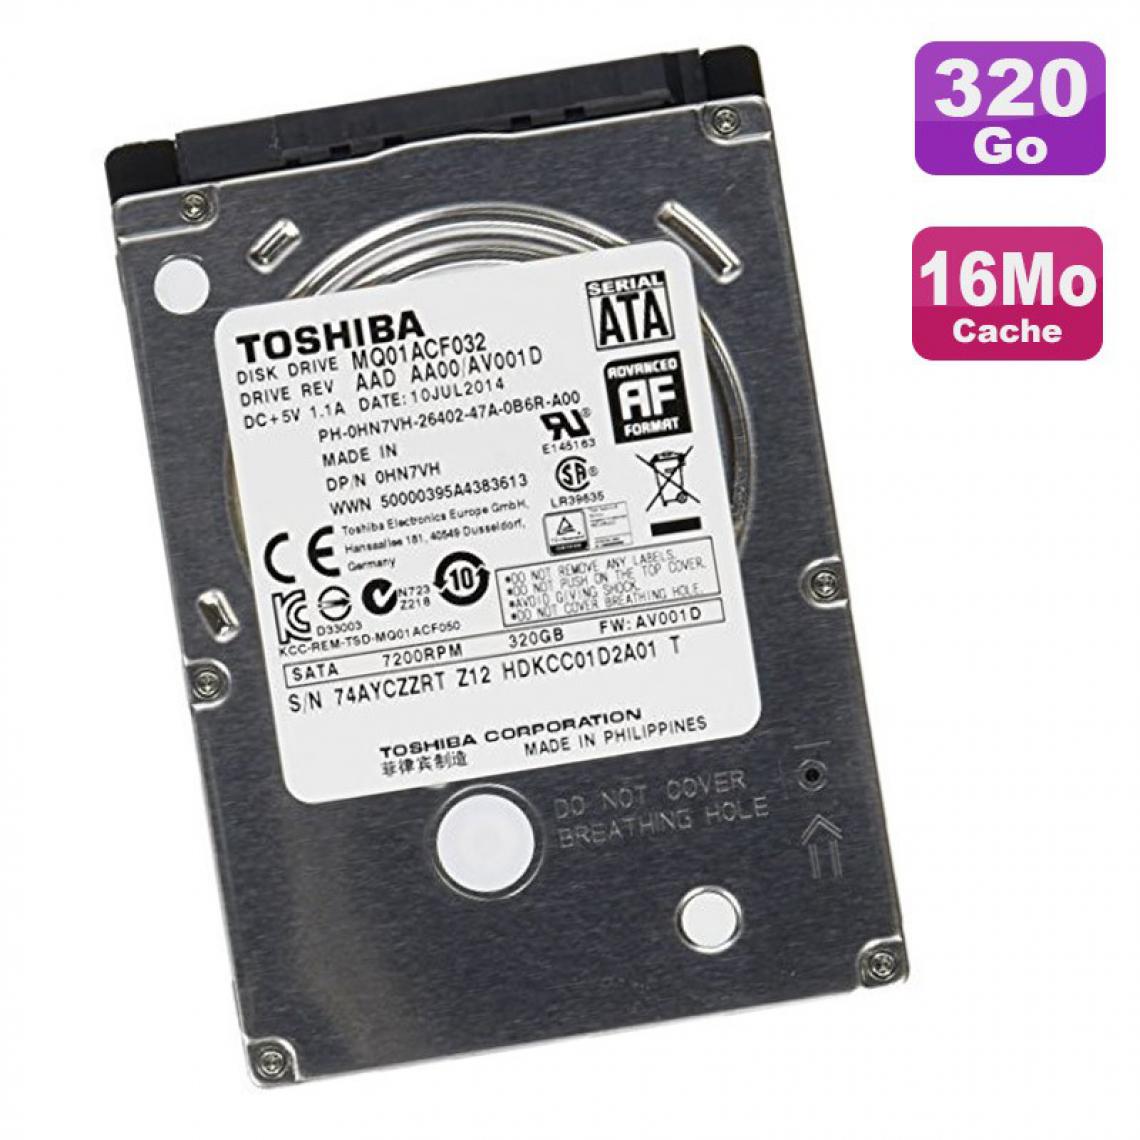 Toshiba - Disque Dur 320Go SATA 2.5" Toshiba MQ01ACF032 7200RPM Pc Portable 16Mo - Disque Dur interne